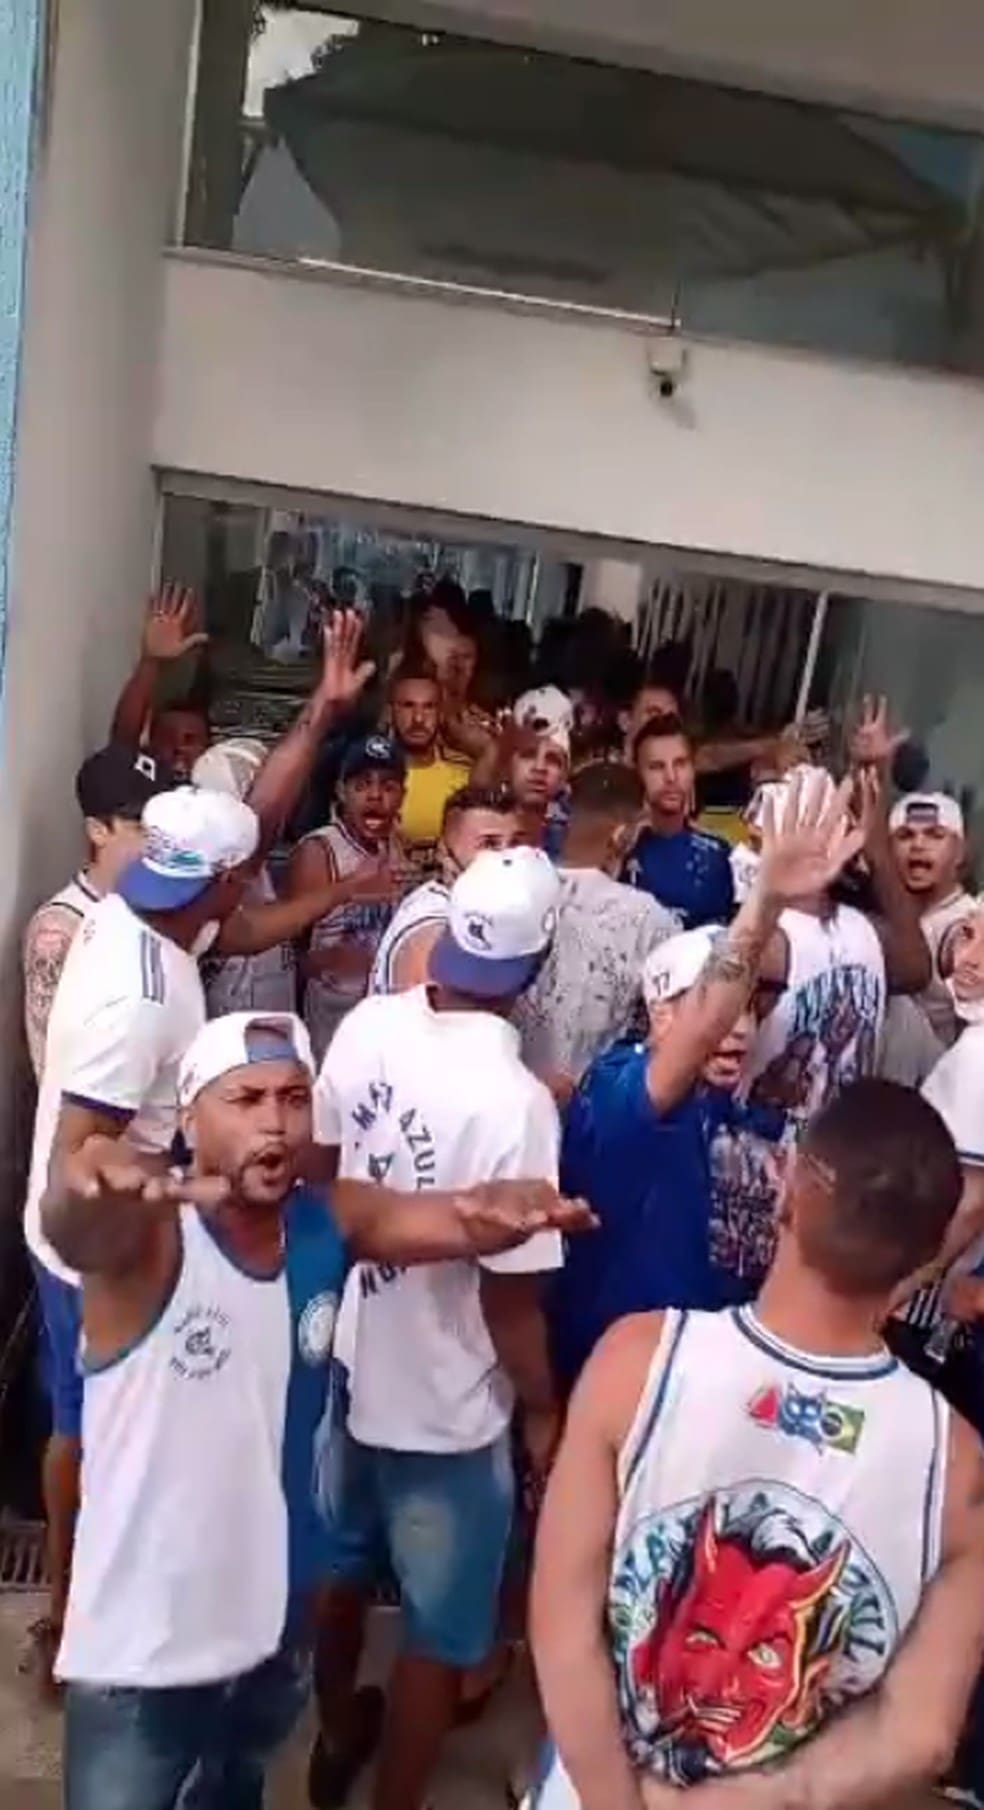 Torcida organizada invadiu a Toca da Raposa do Cruzeiro.